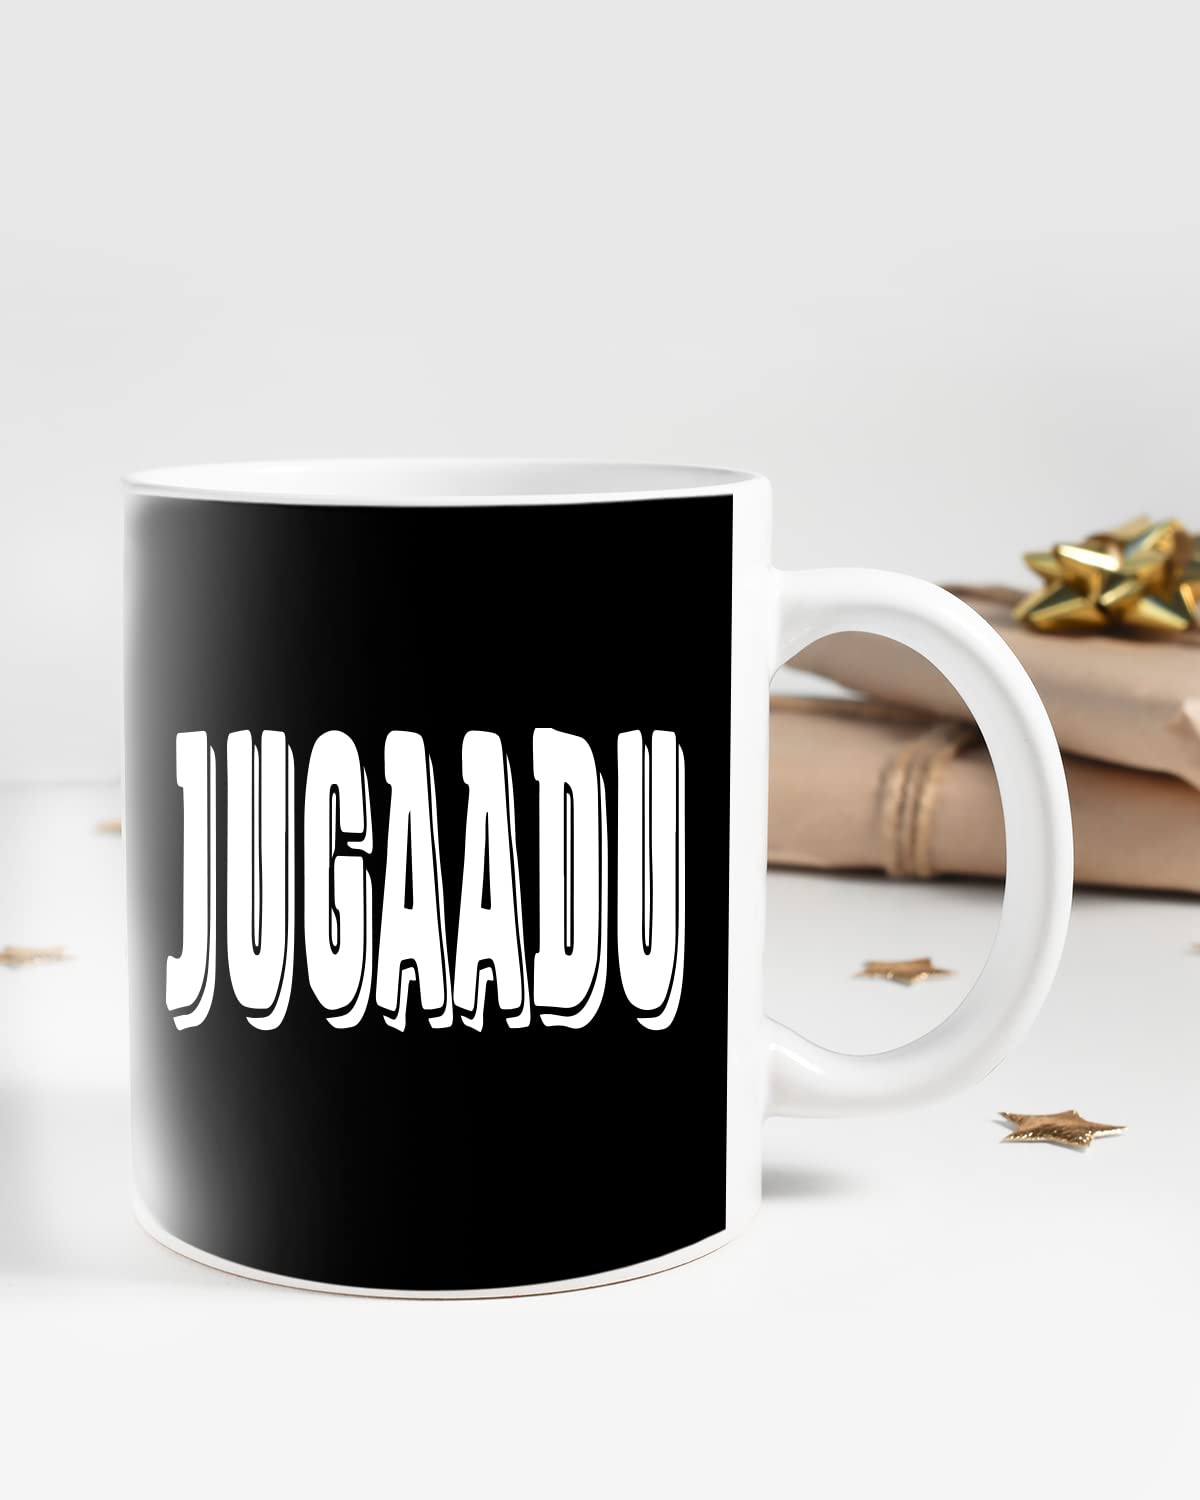 JUGAADU Coffee Mug - Gift for Friend, Birthday Gift, Birthday Mug, Motivational Quotes Mug, Mugs with Funny & Funky Dialogues, Bollywood Mugs, Funny Mugs for Him & Her